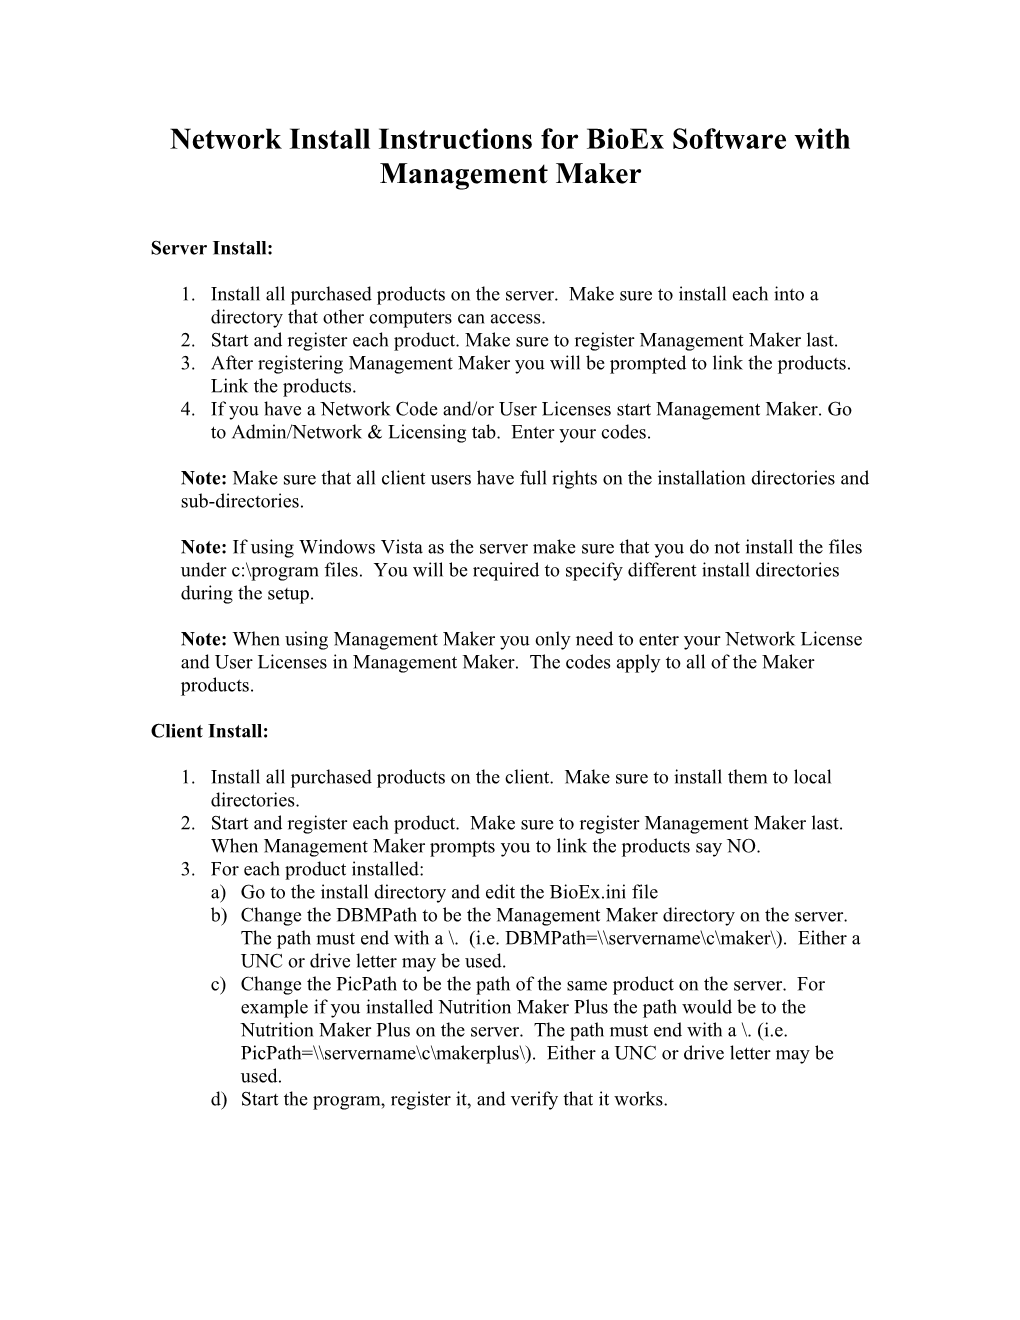 Management Maker Network Install Instructions